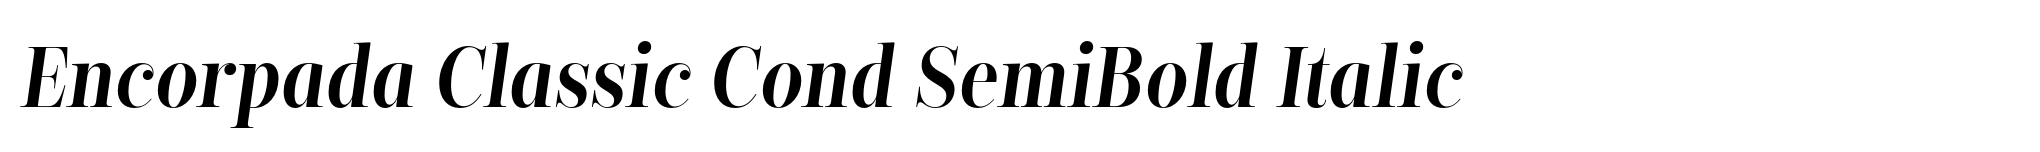 Encorpada Classic Cond SemiBold Italic image